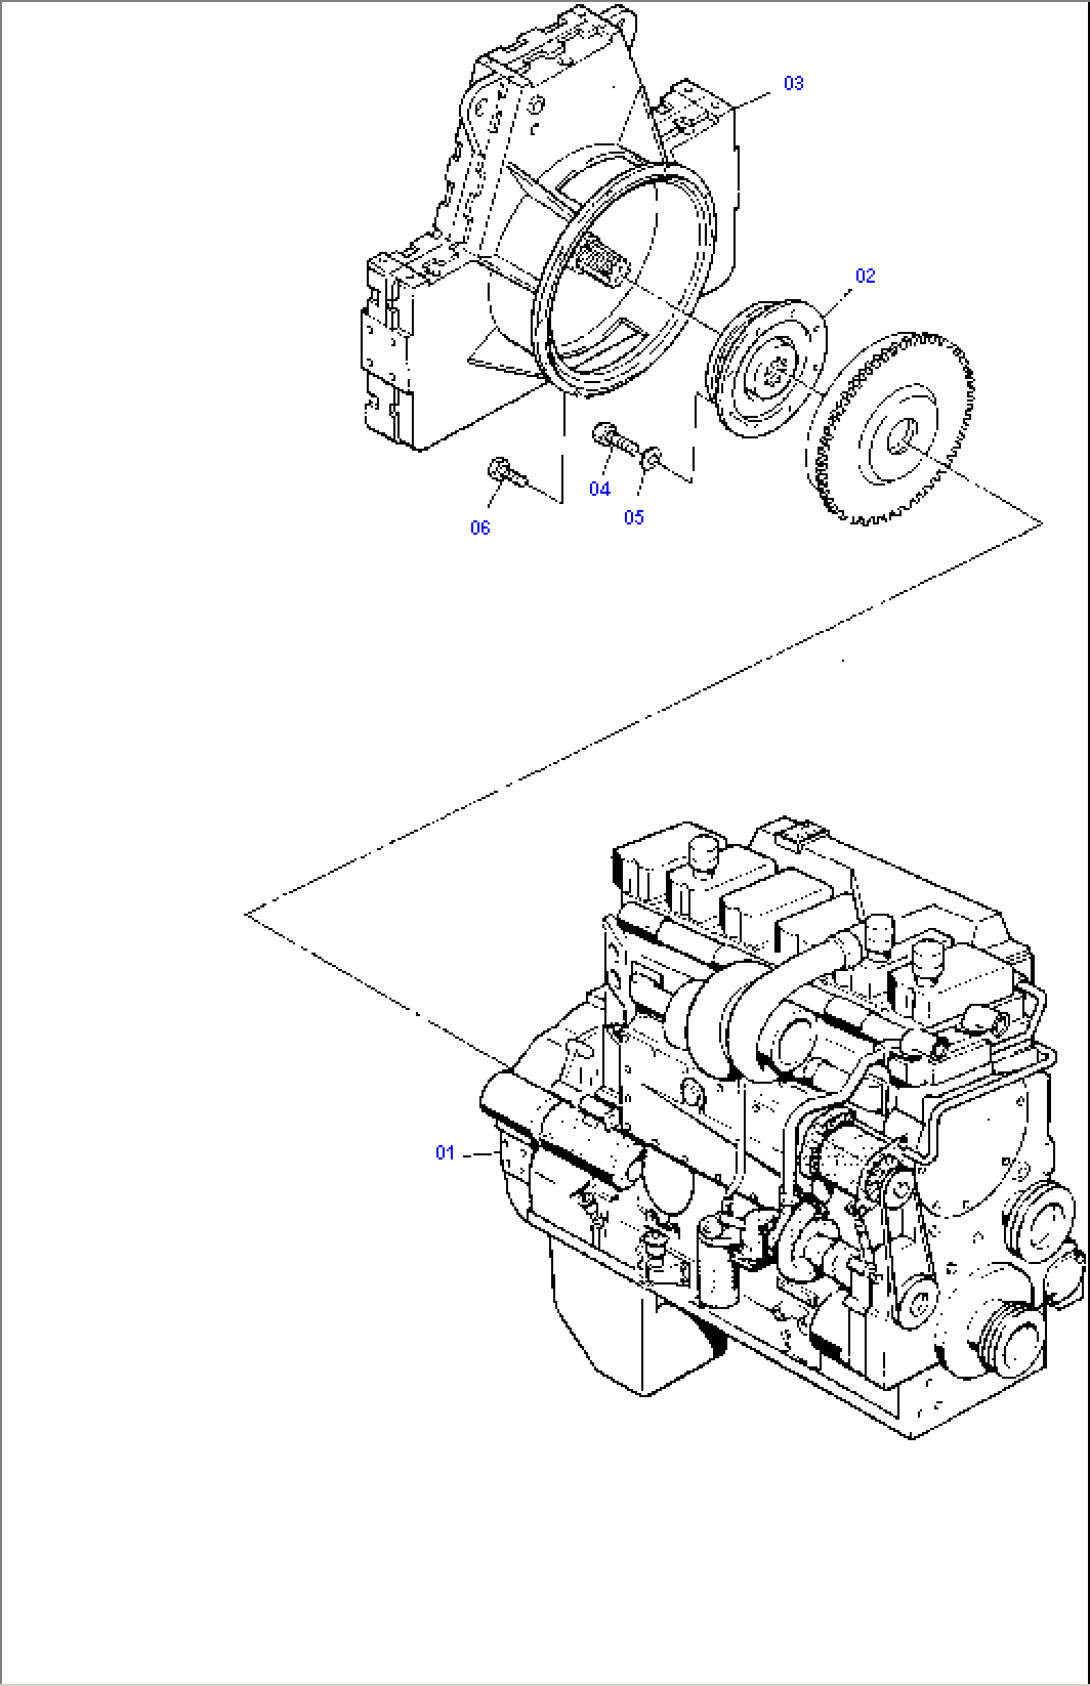 Drive Arrangement (Cummins-Engine)